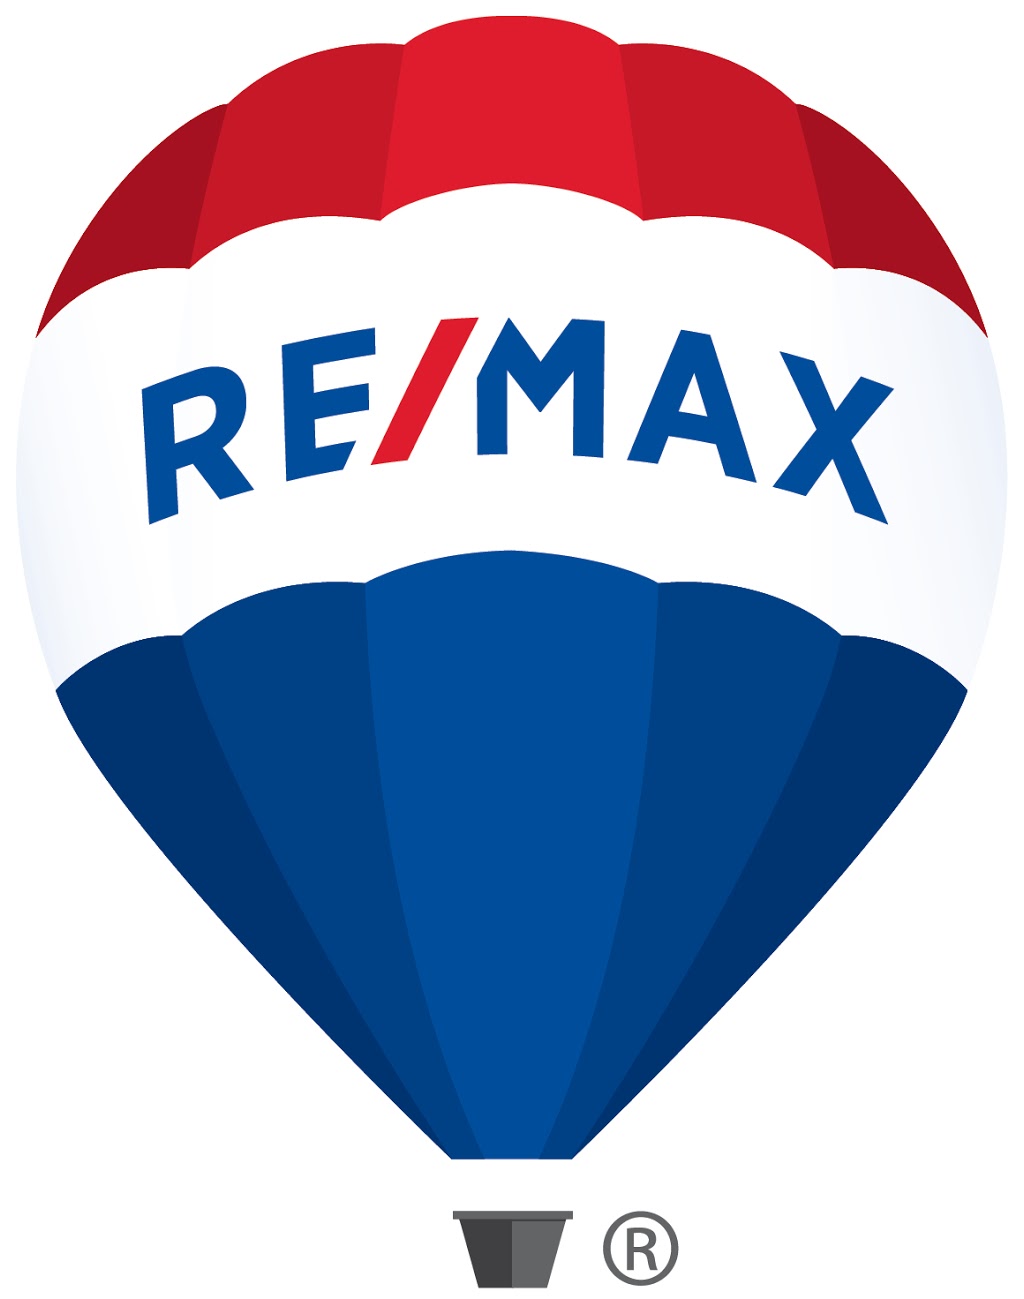 REMAX Hinterland Real Estate Montville | real estate agency | 7/171 Main St, Montville QLD 4560, Australia | 0499785111 OR +61 499 785 111